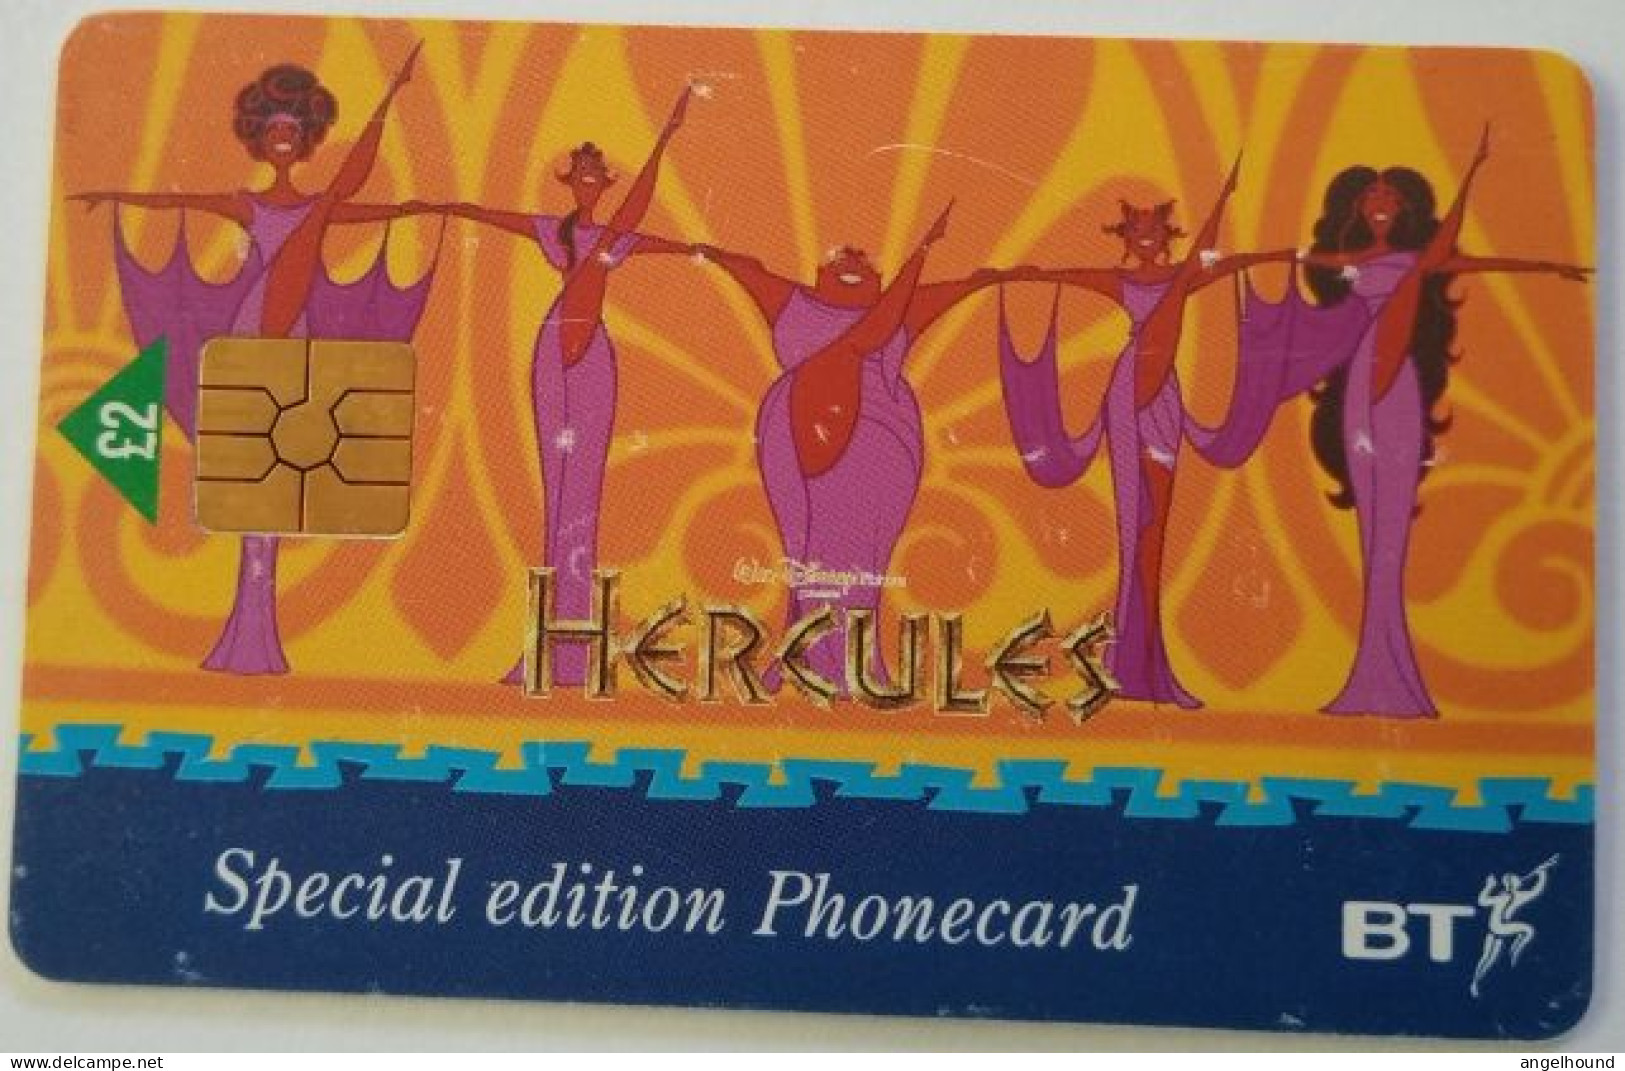 UK BT £2 Chip Card - Special Edition " Hercules " - BT Promotie